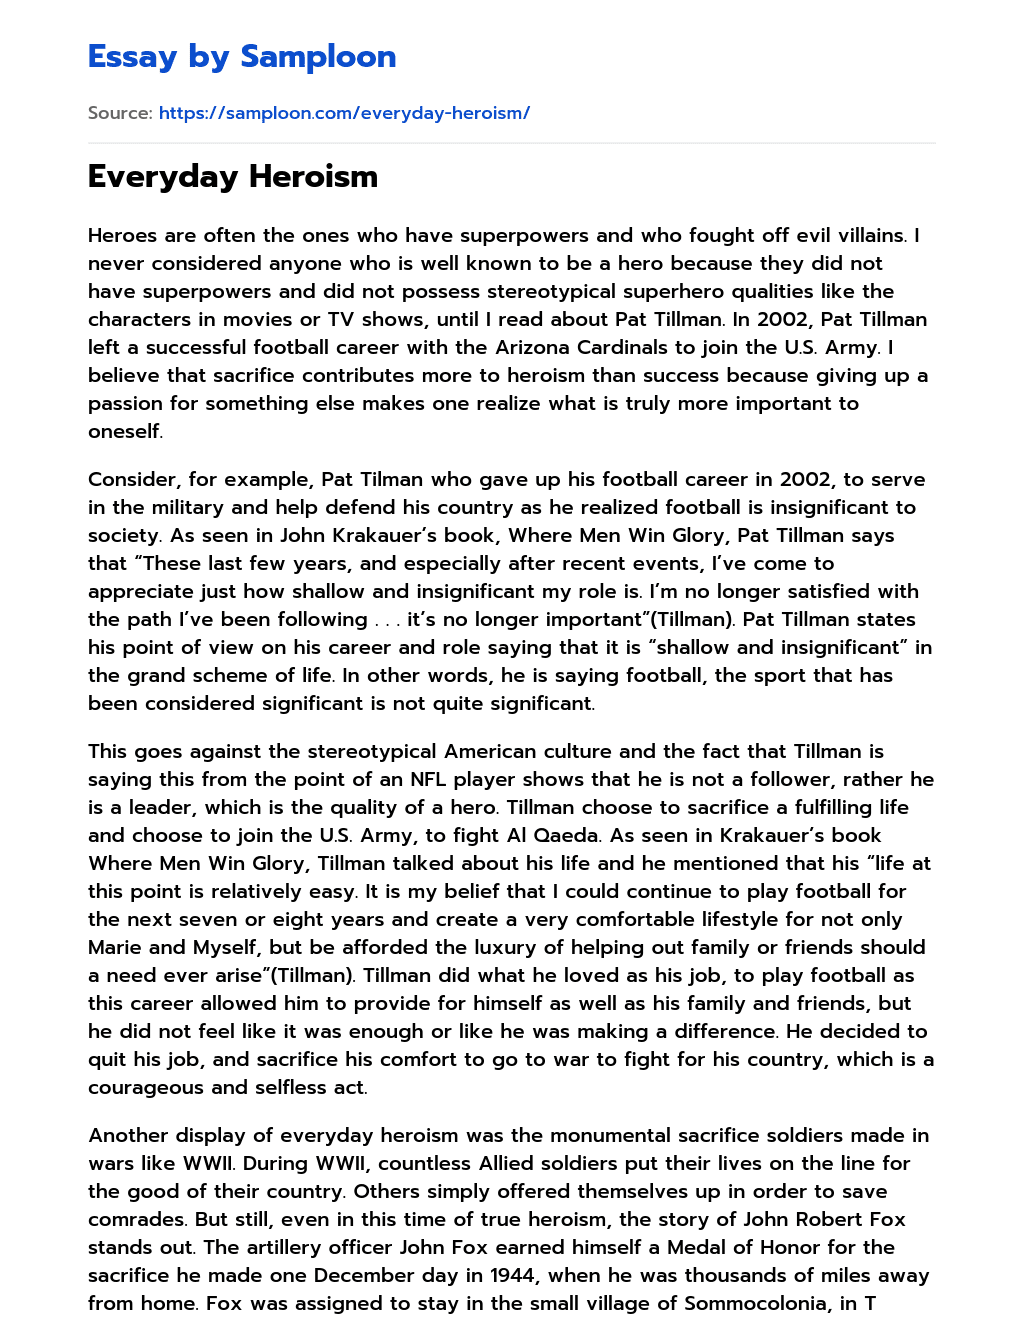 essay everyday heroism